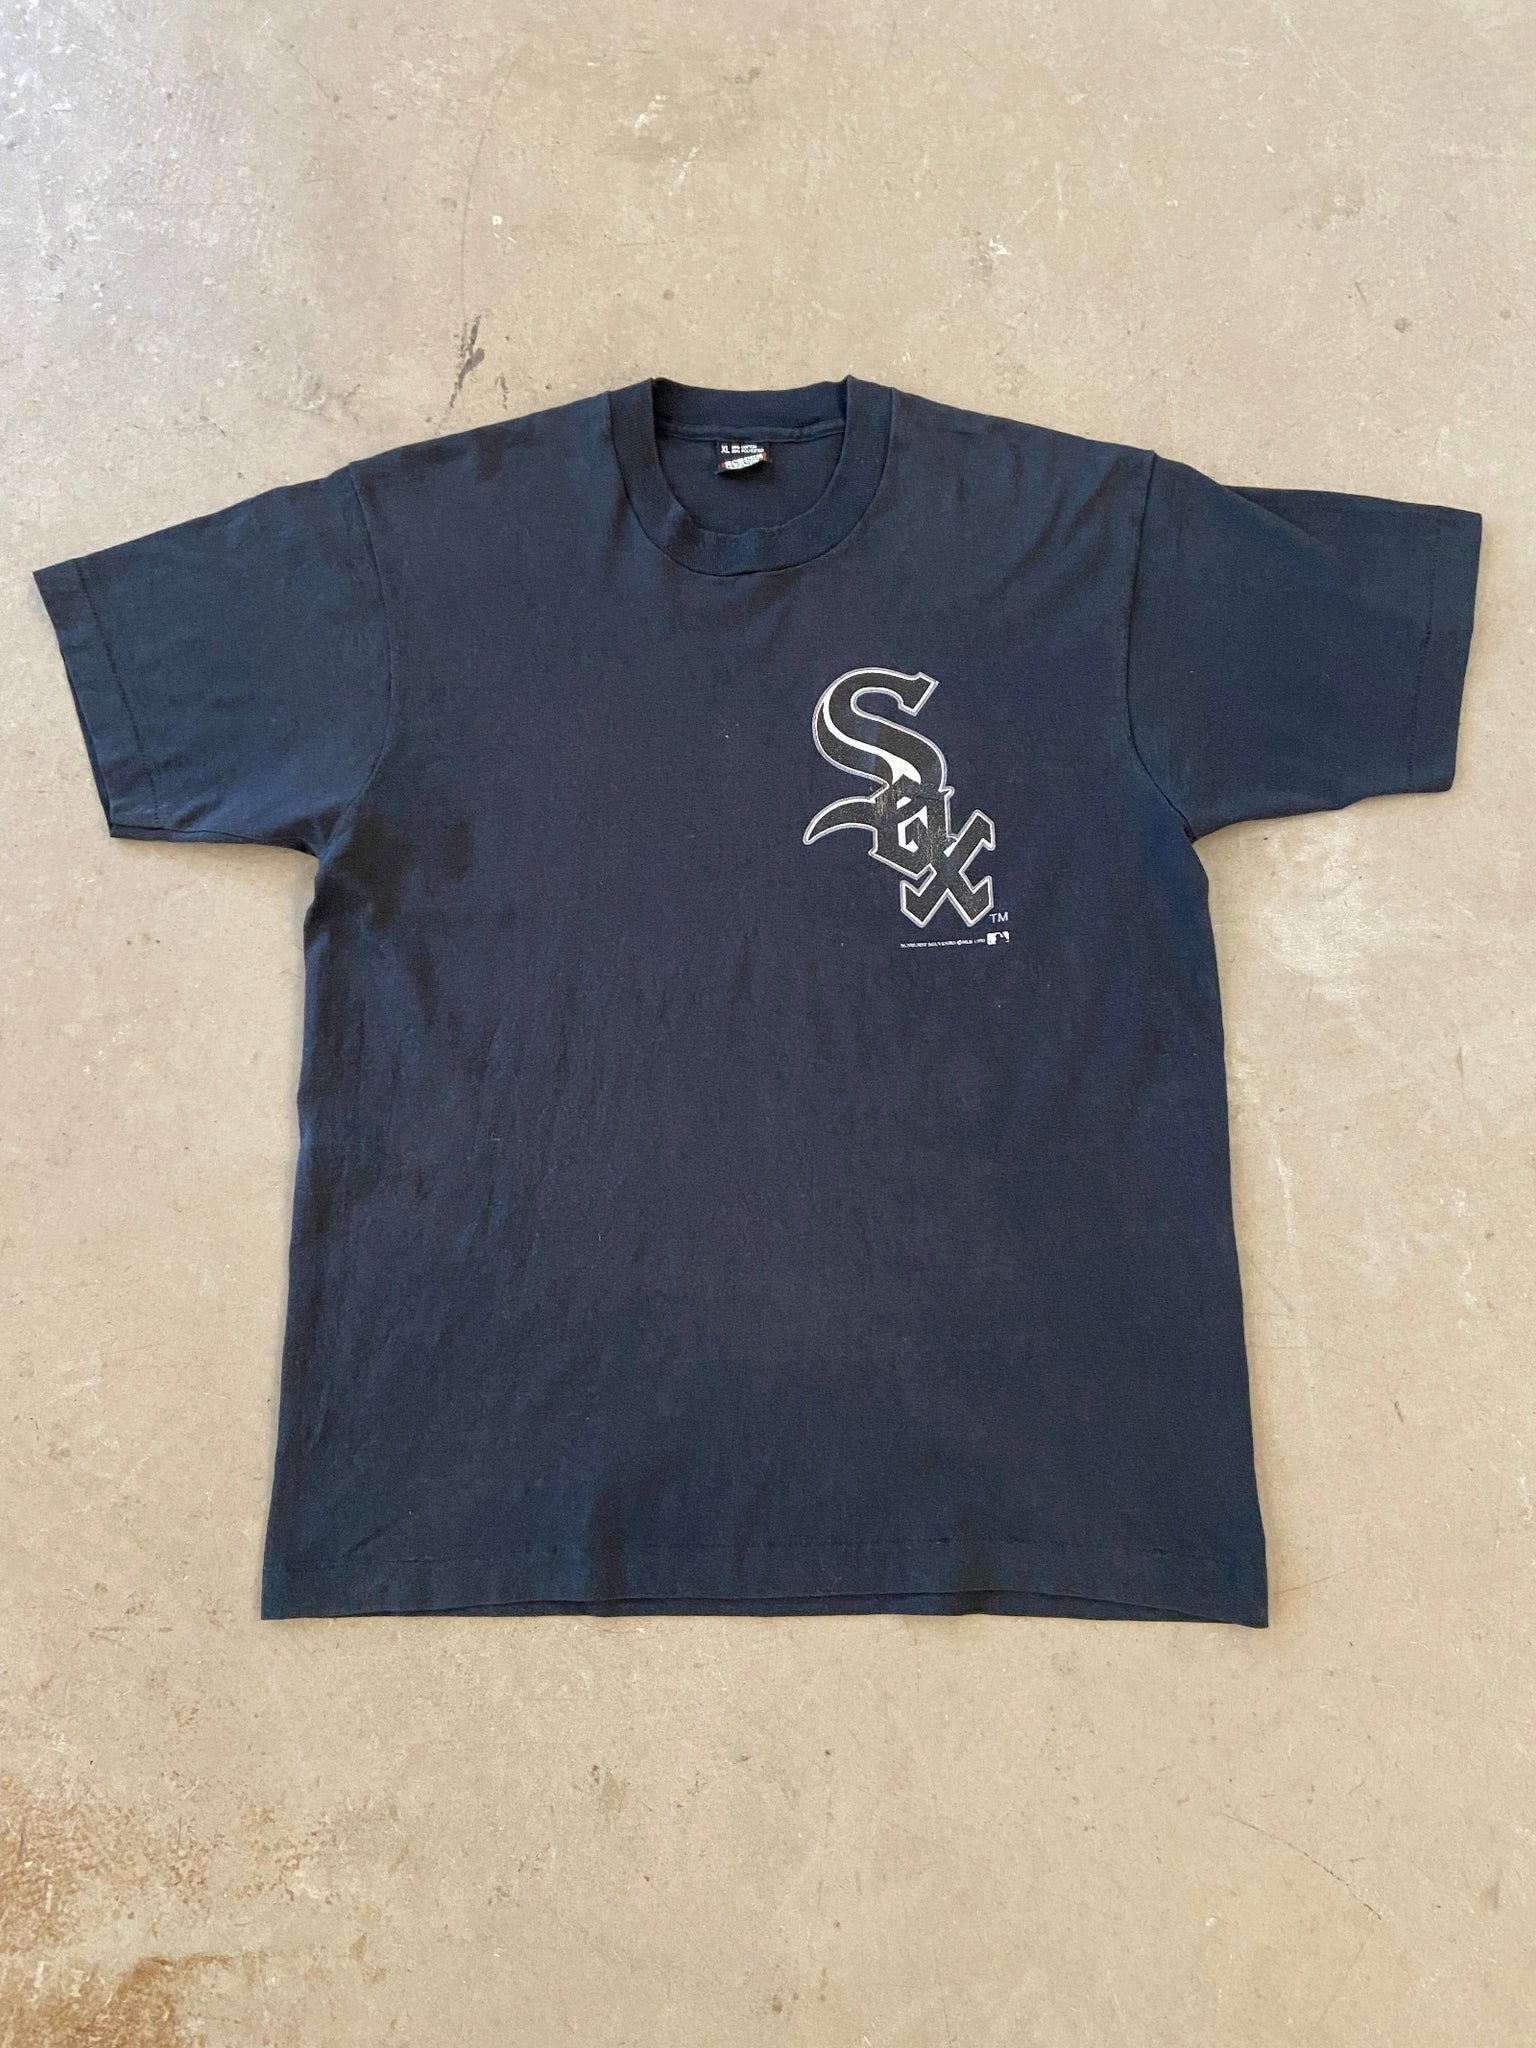 1990 Chicago White Sox T-shirt - XL